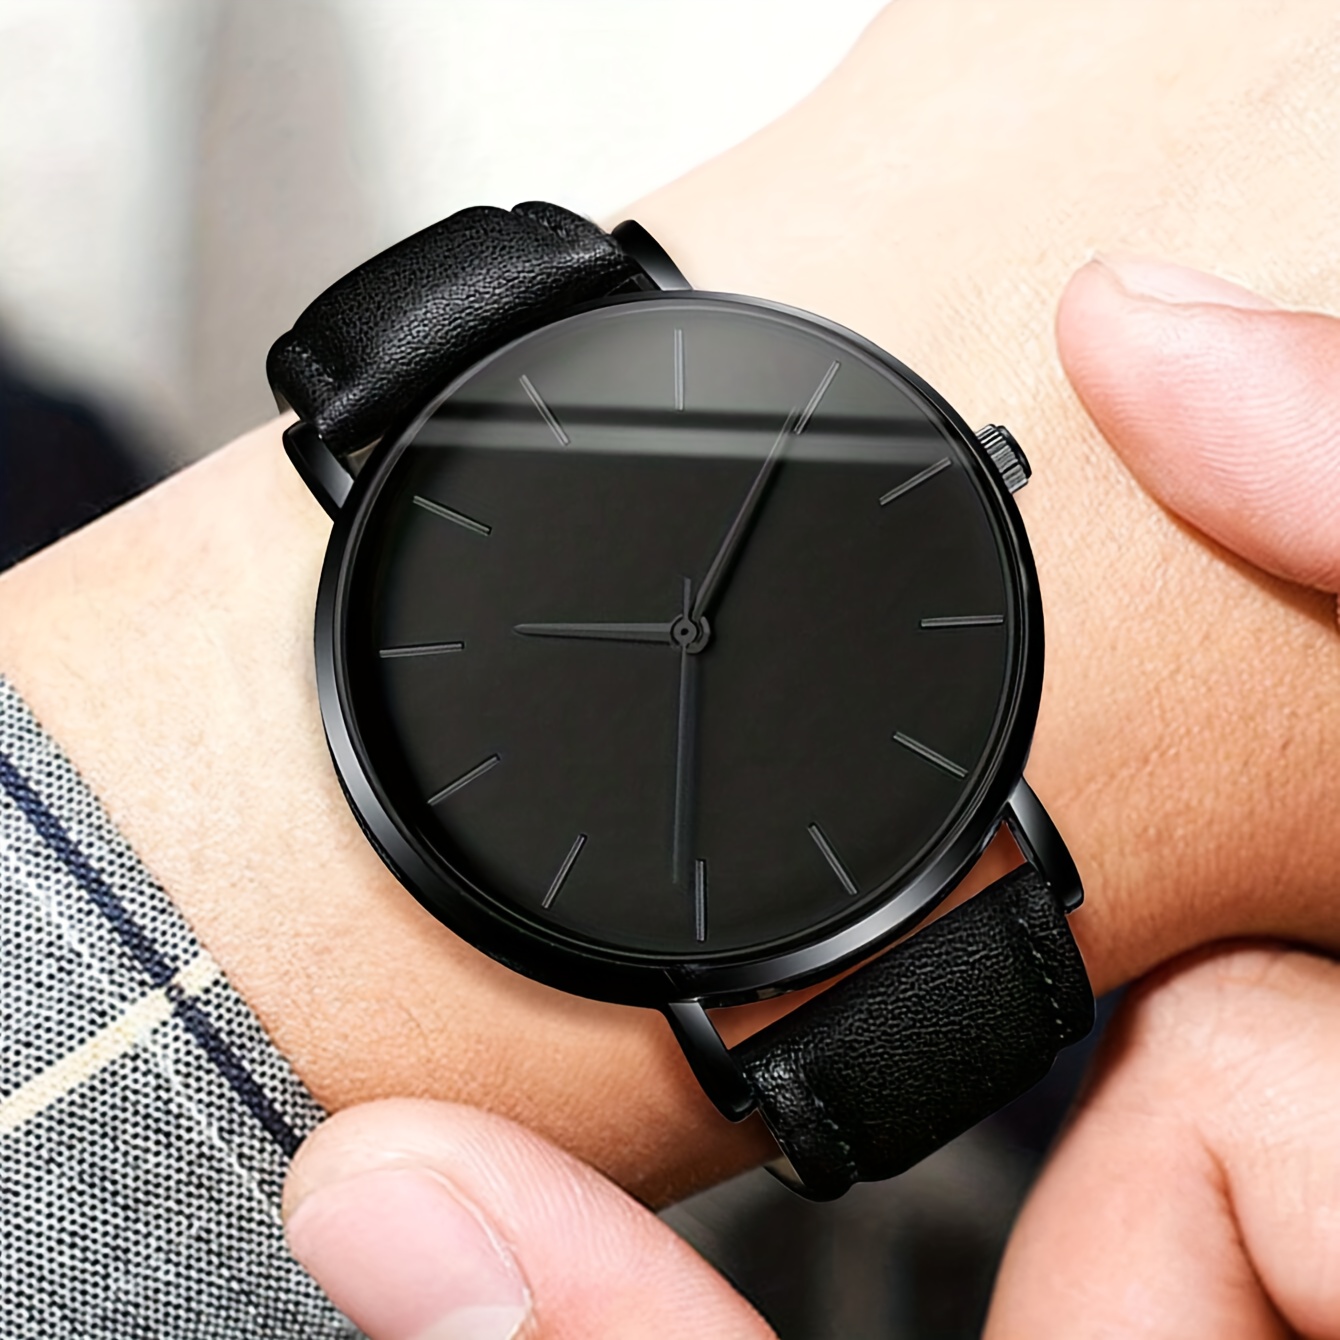 Smartwatch redondo con correa negra